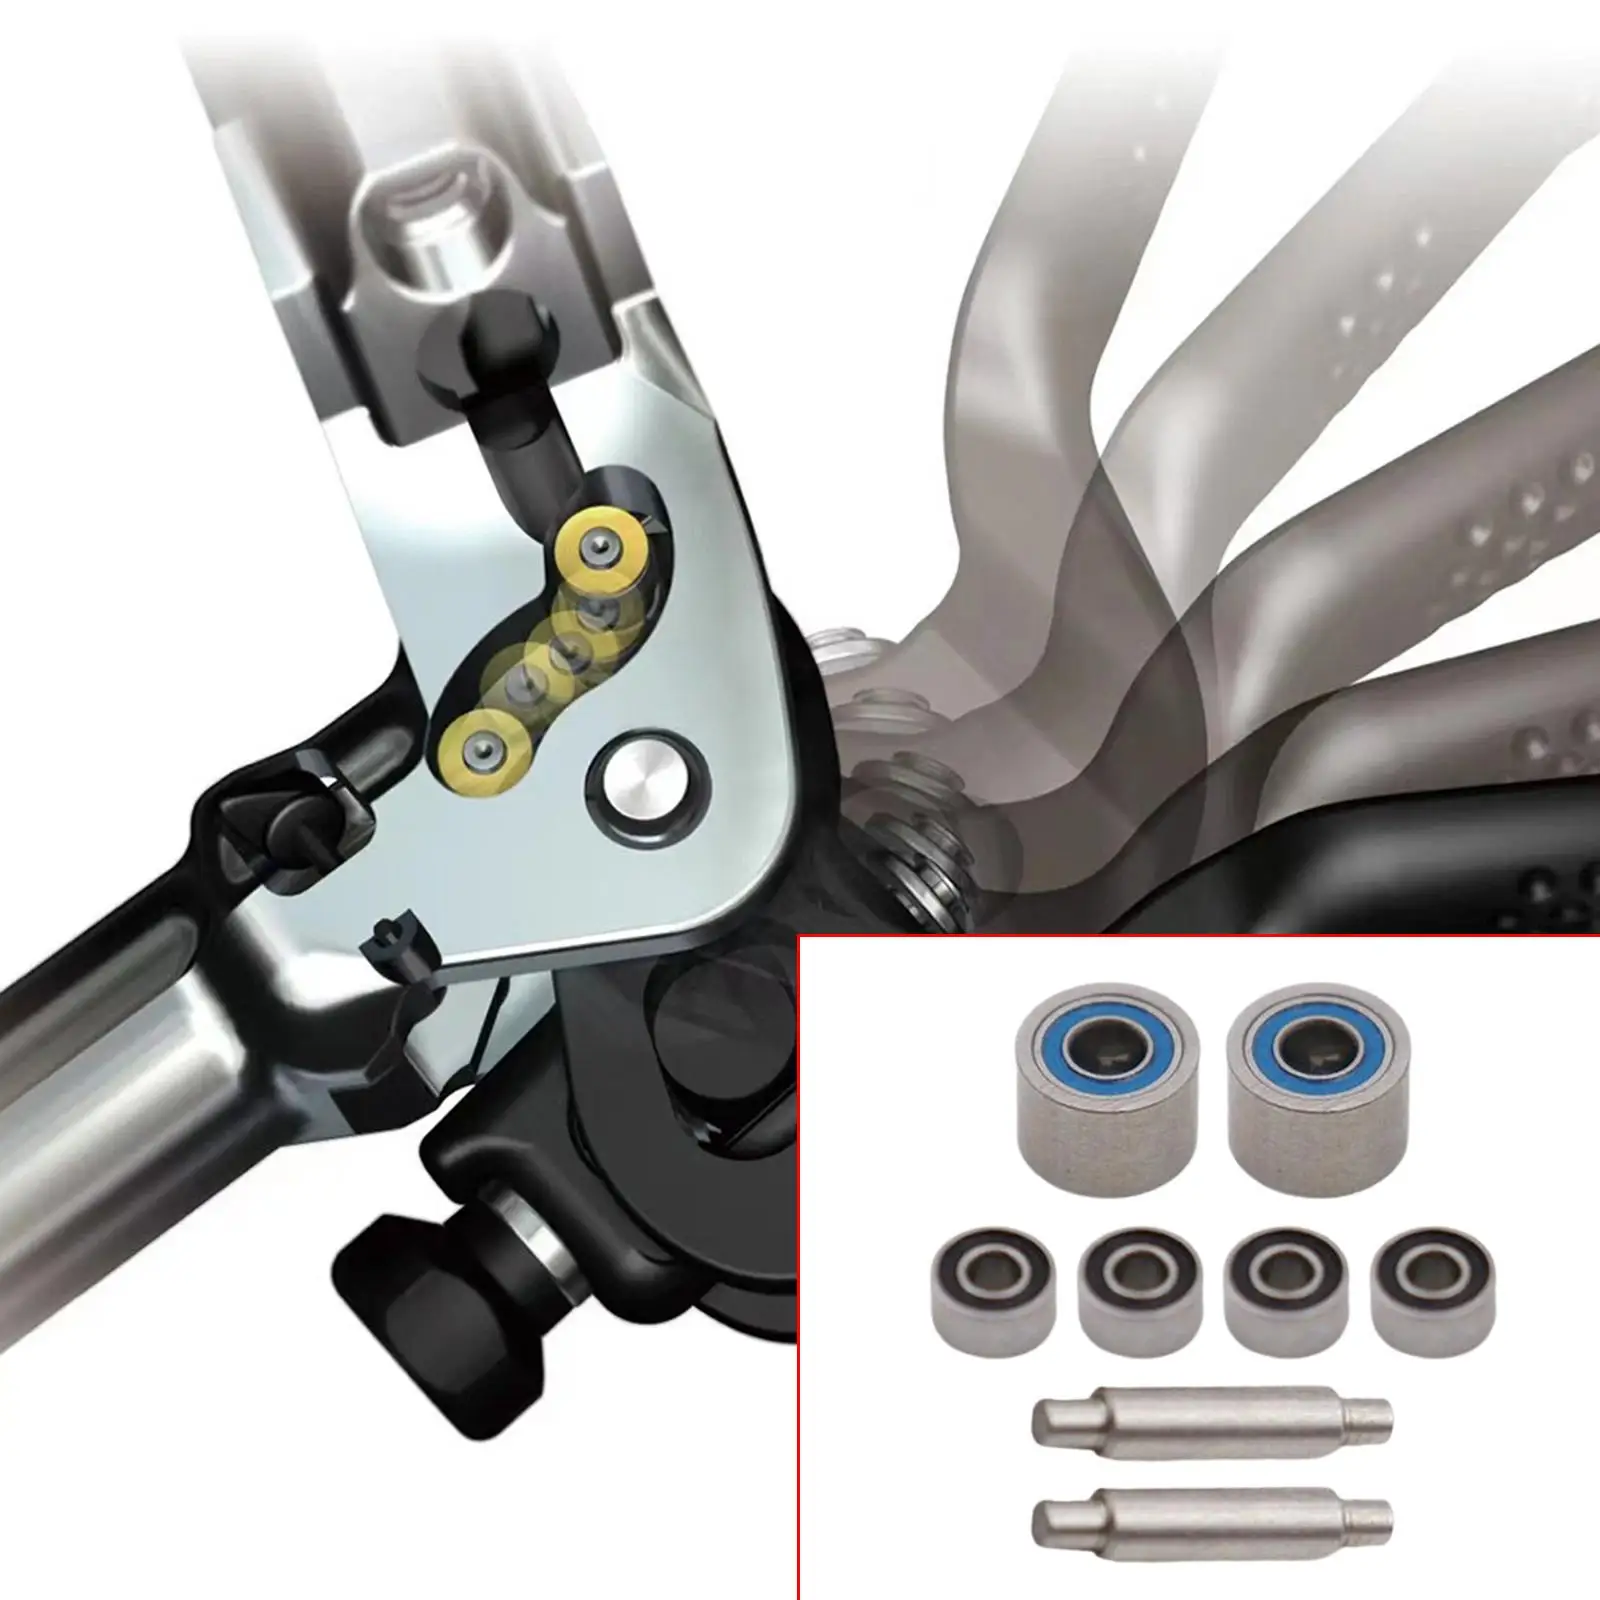 Oil Disc Brake Lever Bearing Kit Replace Sturdy Professional Bike Disc Brake Lever Parts Bike cam Modification Part Cam Bearing